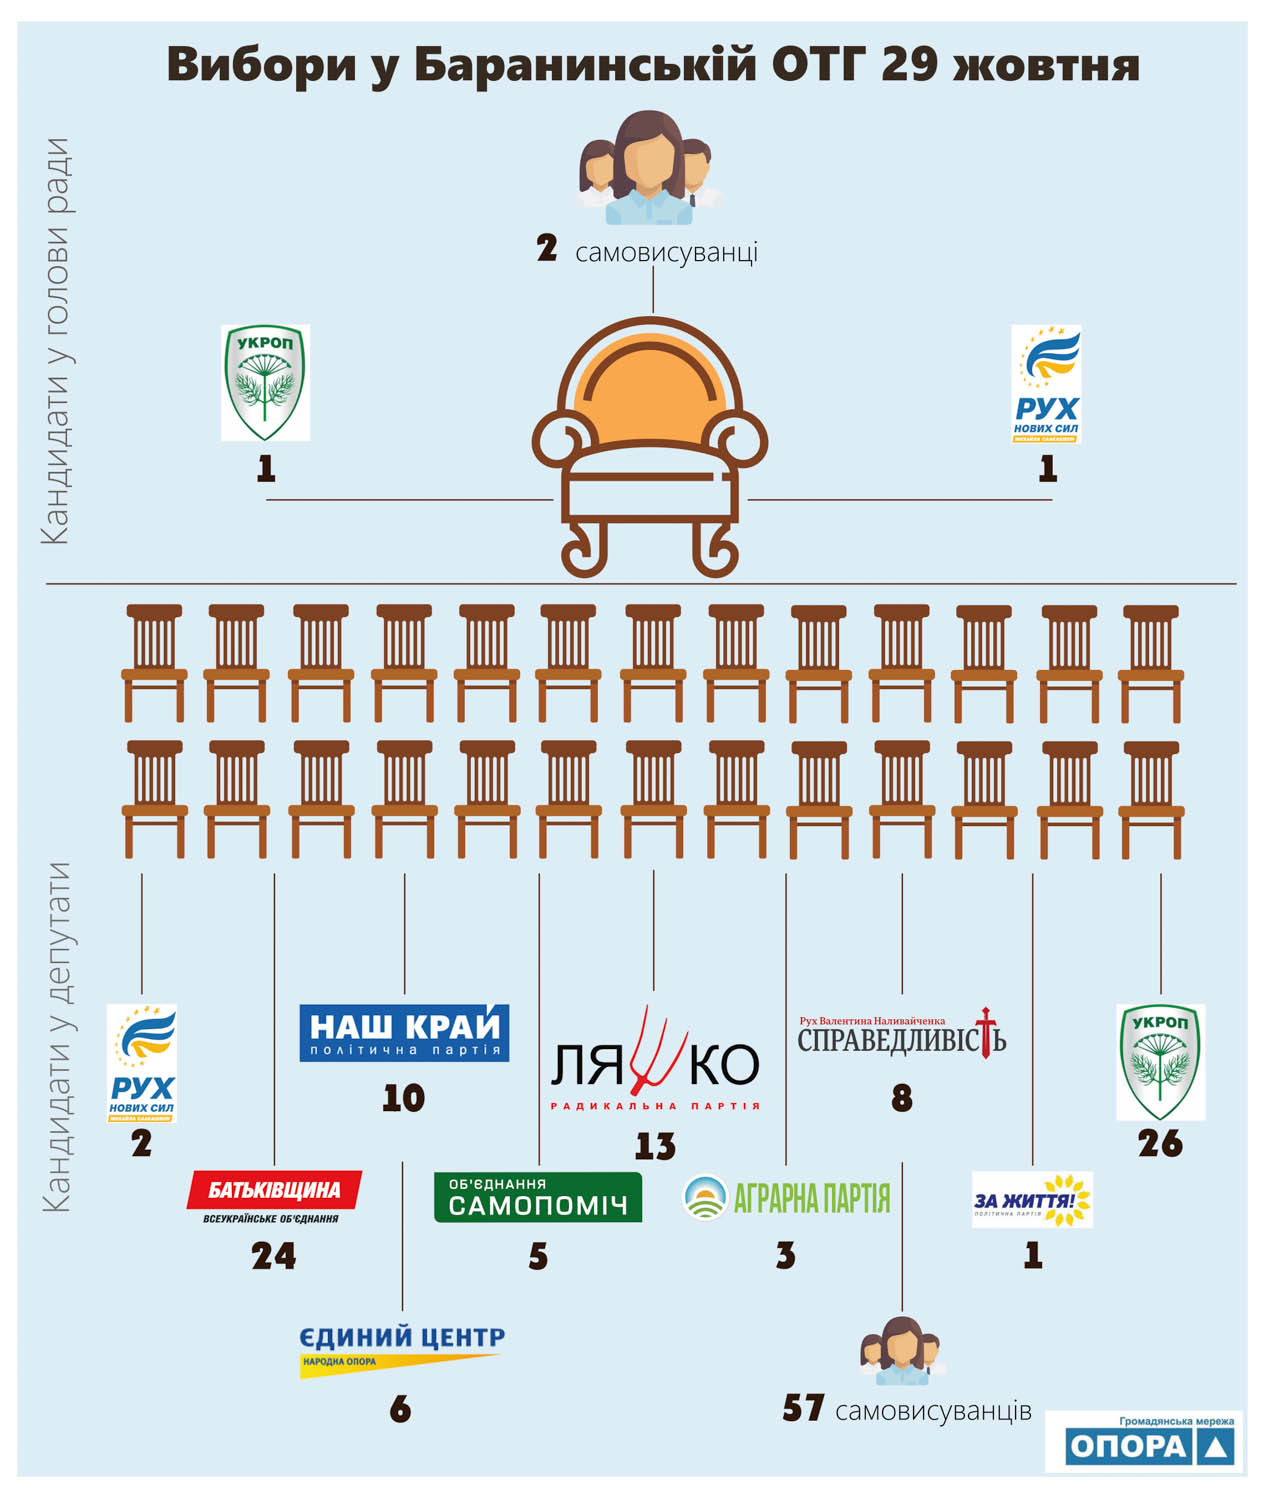 zakarpattya 7.10.2017 kandydaty infografika